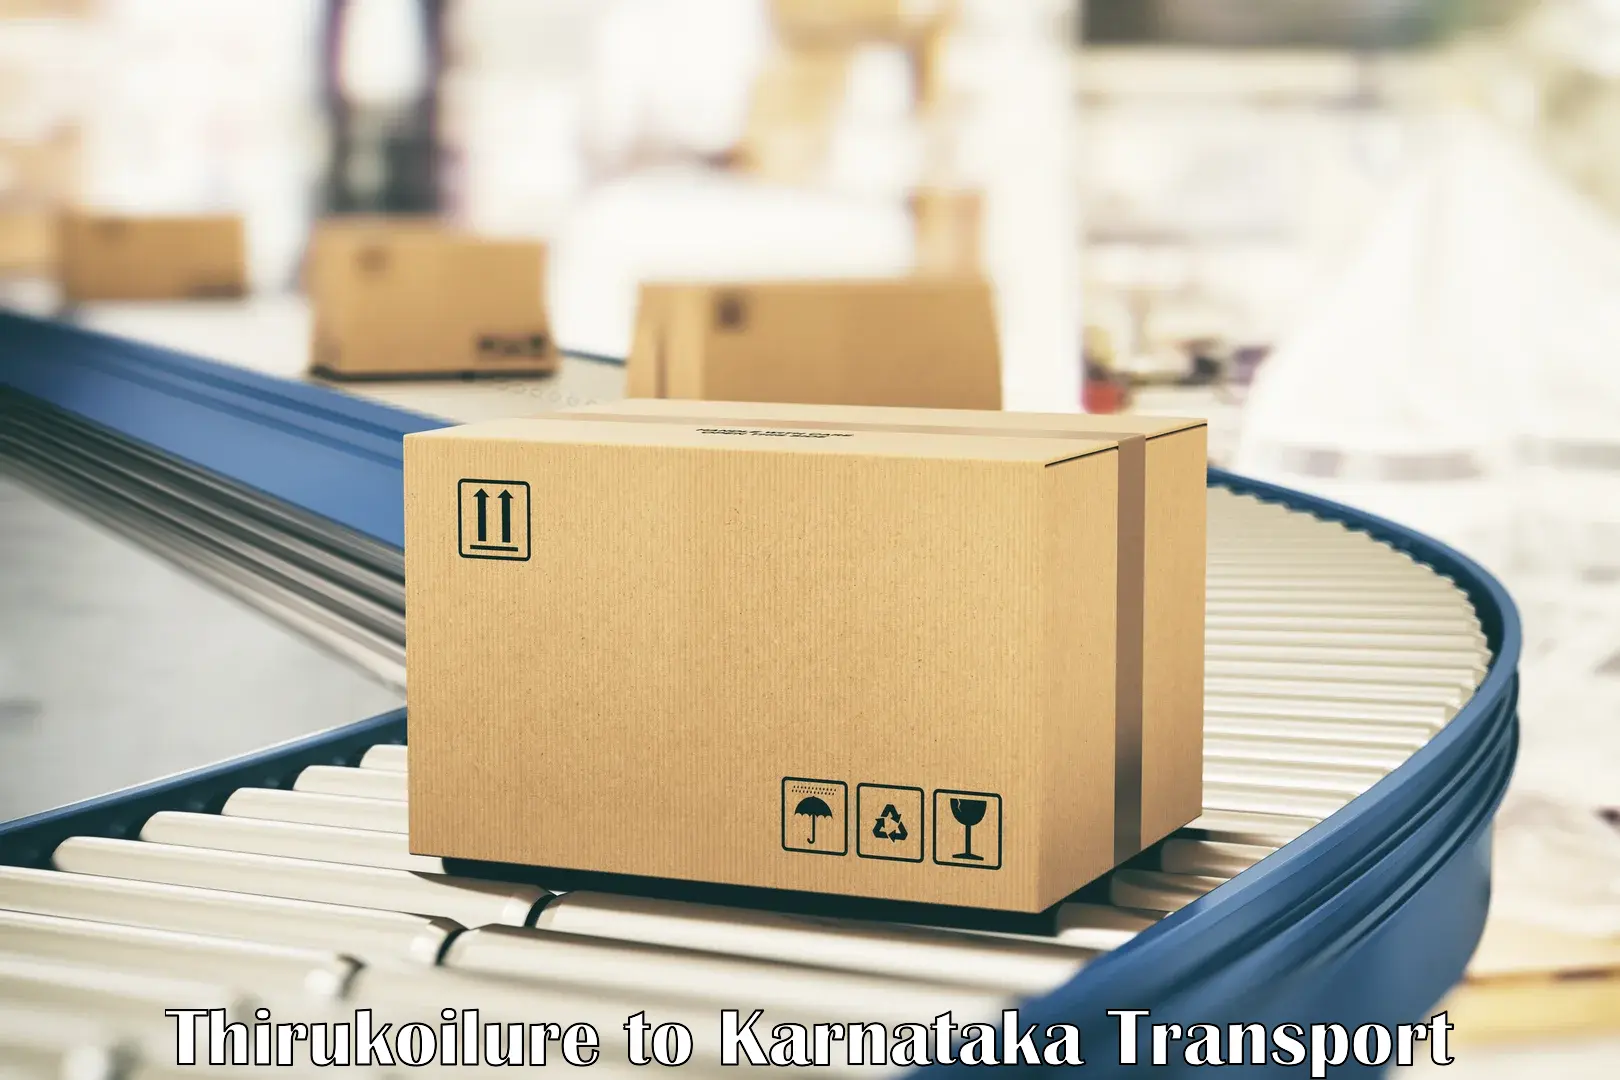 Lorry transport service Thirukoilure to Kolar